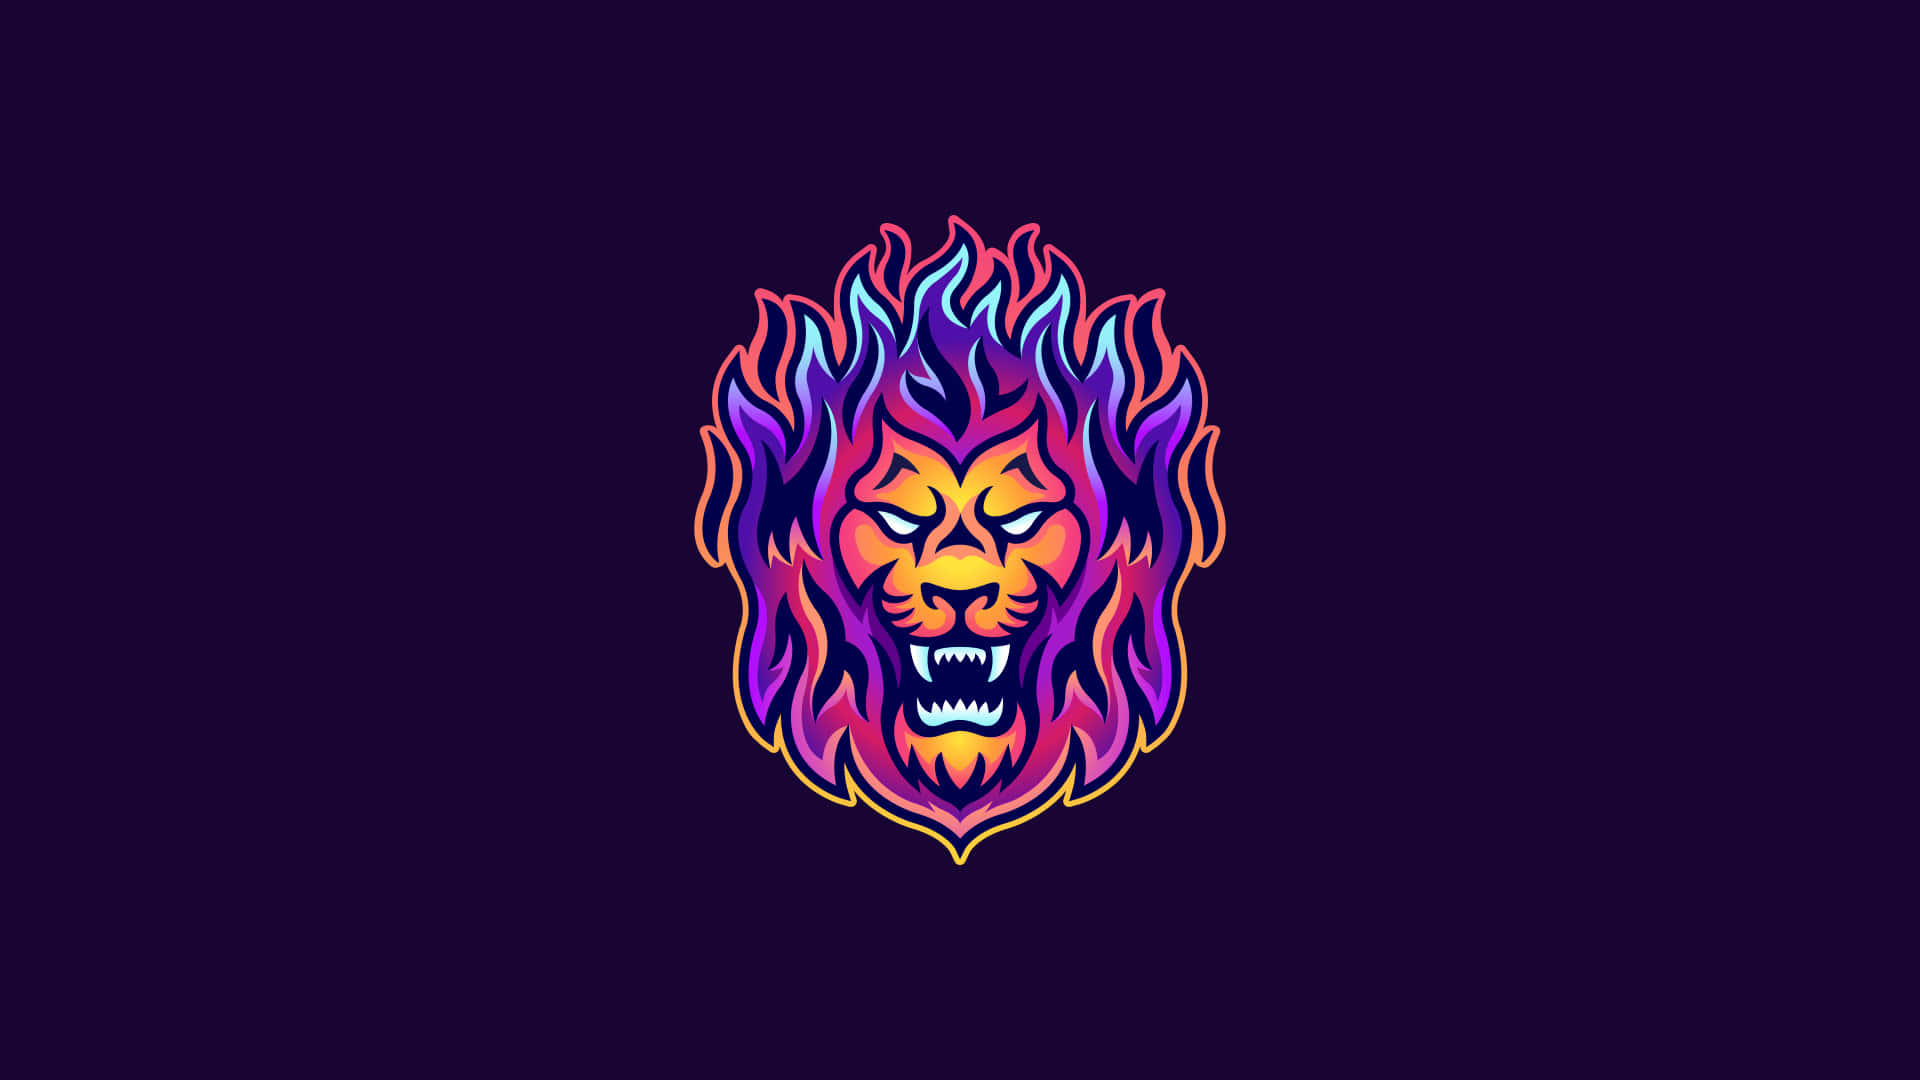 A Colorful Lion Head Logo On A Dark Background